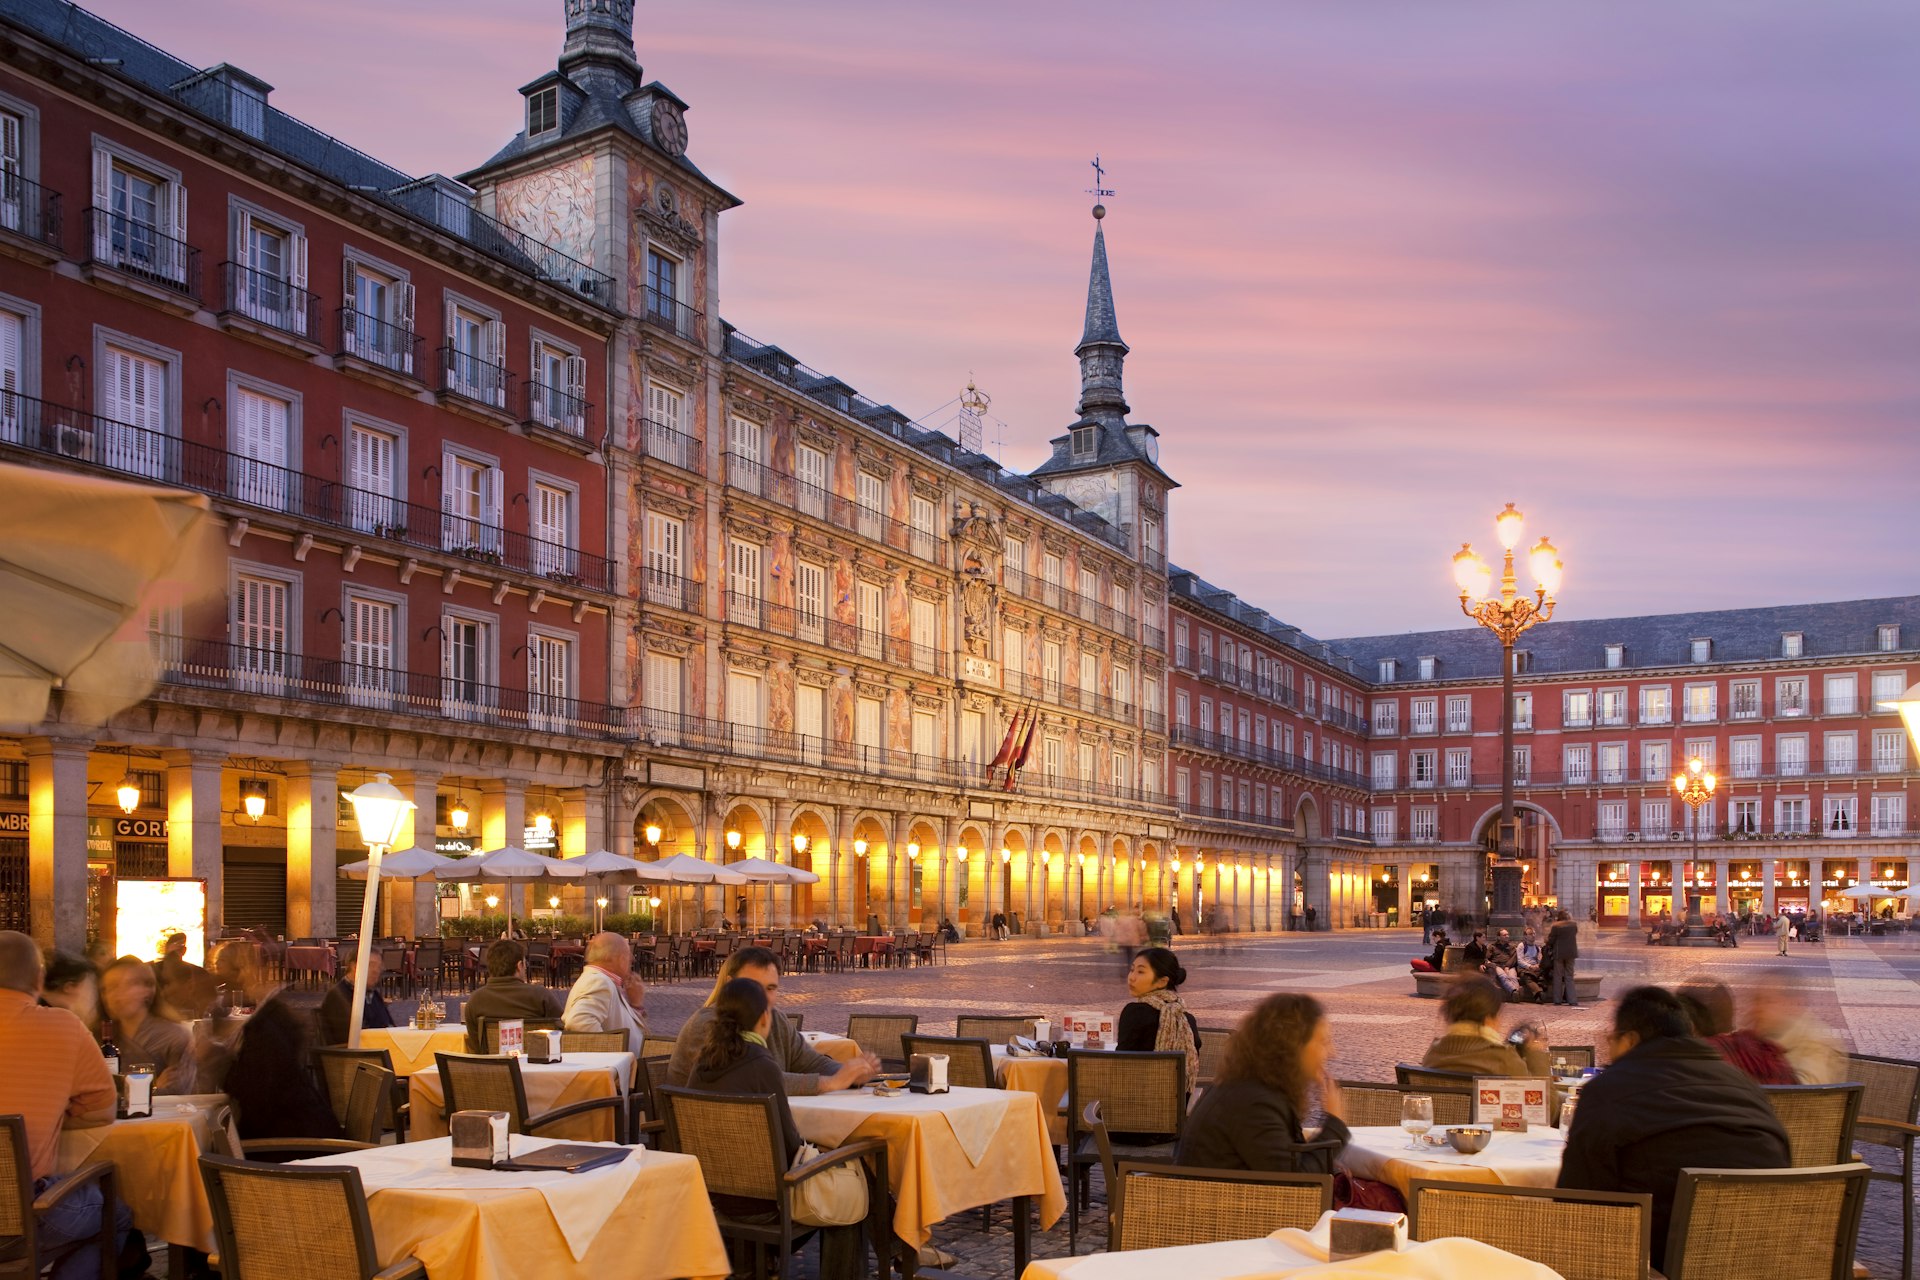 People sitting outside at tables on Madrid's Plaza Mayor at dusk